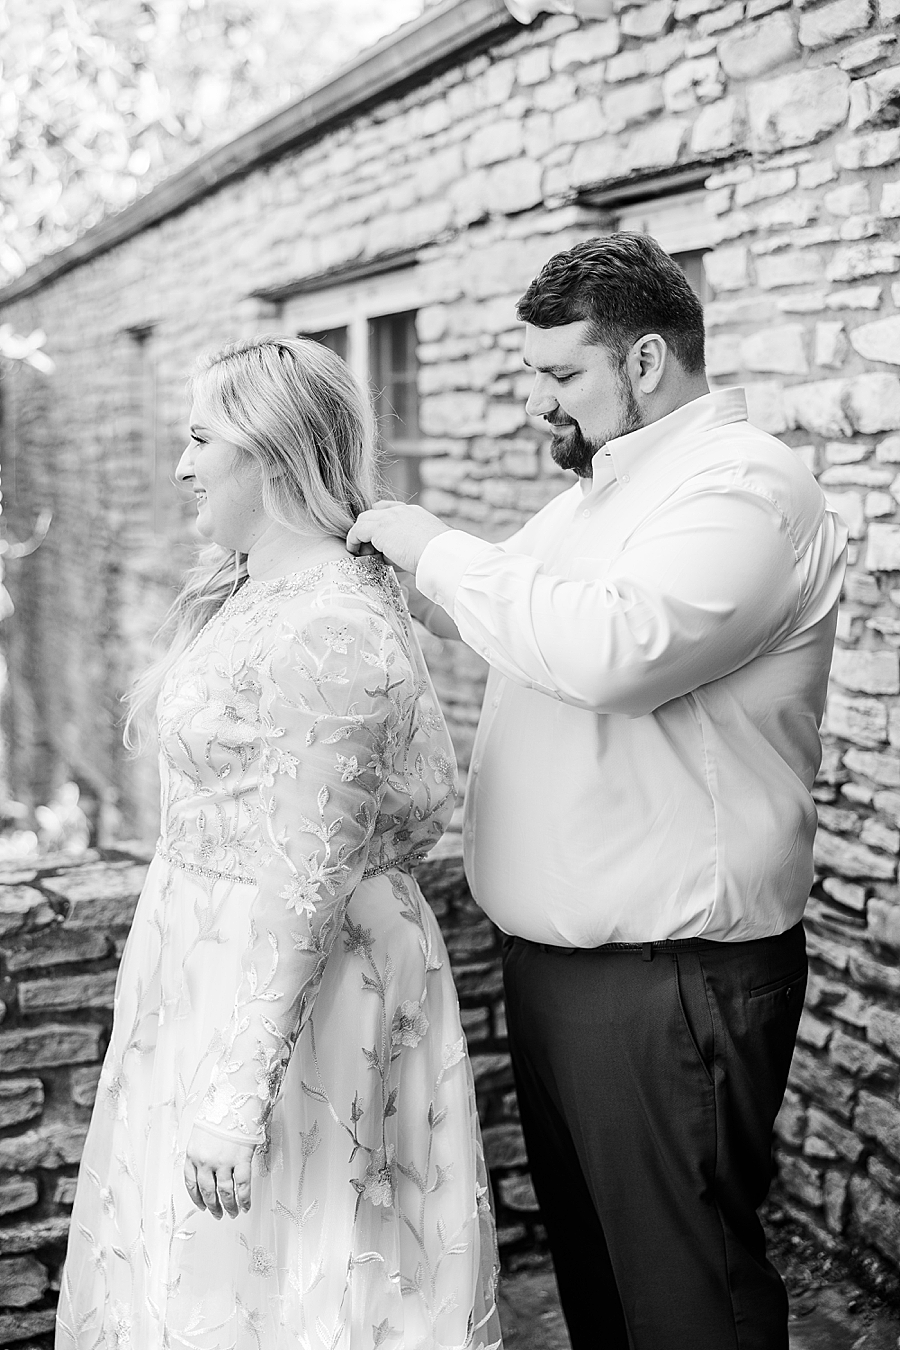 Groom zipping bride's dress at Knoxville Botanical Gardens Wedding by Amanda May Photos